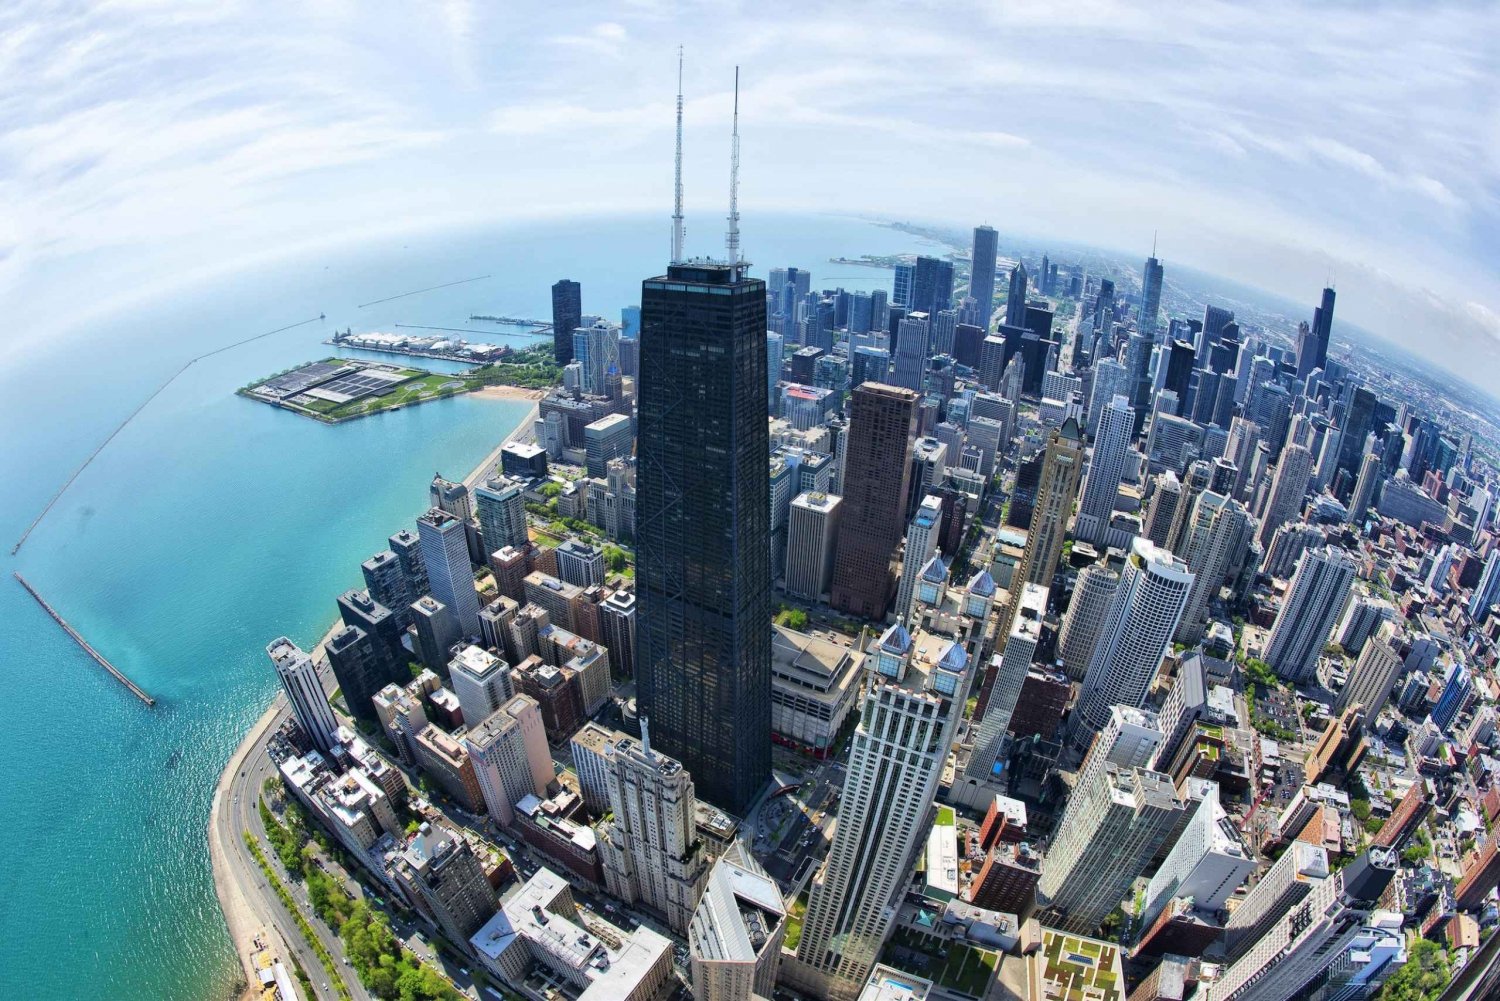 Chicago: 360 Chicago Observation Deck - wstęp ogólny